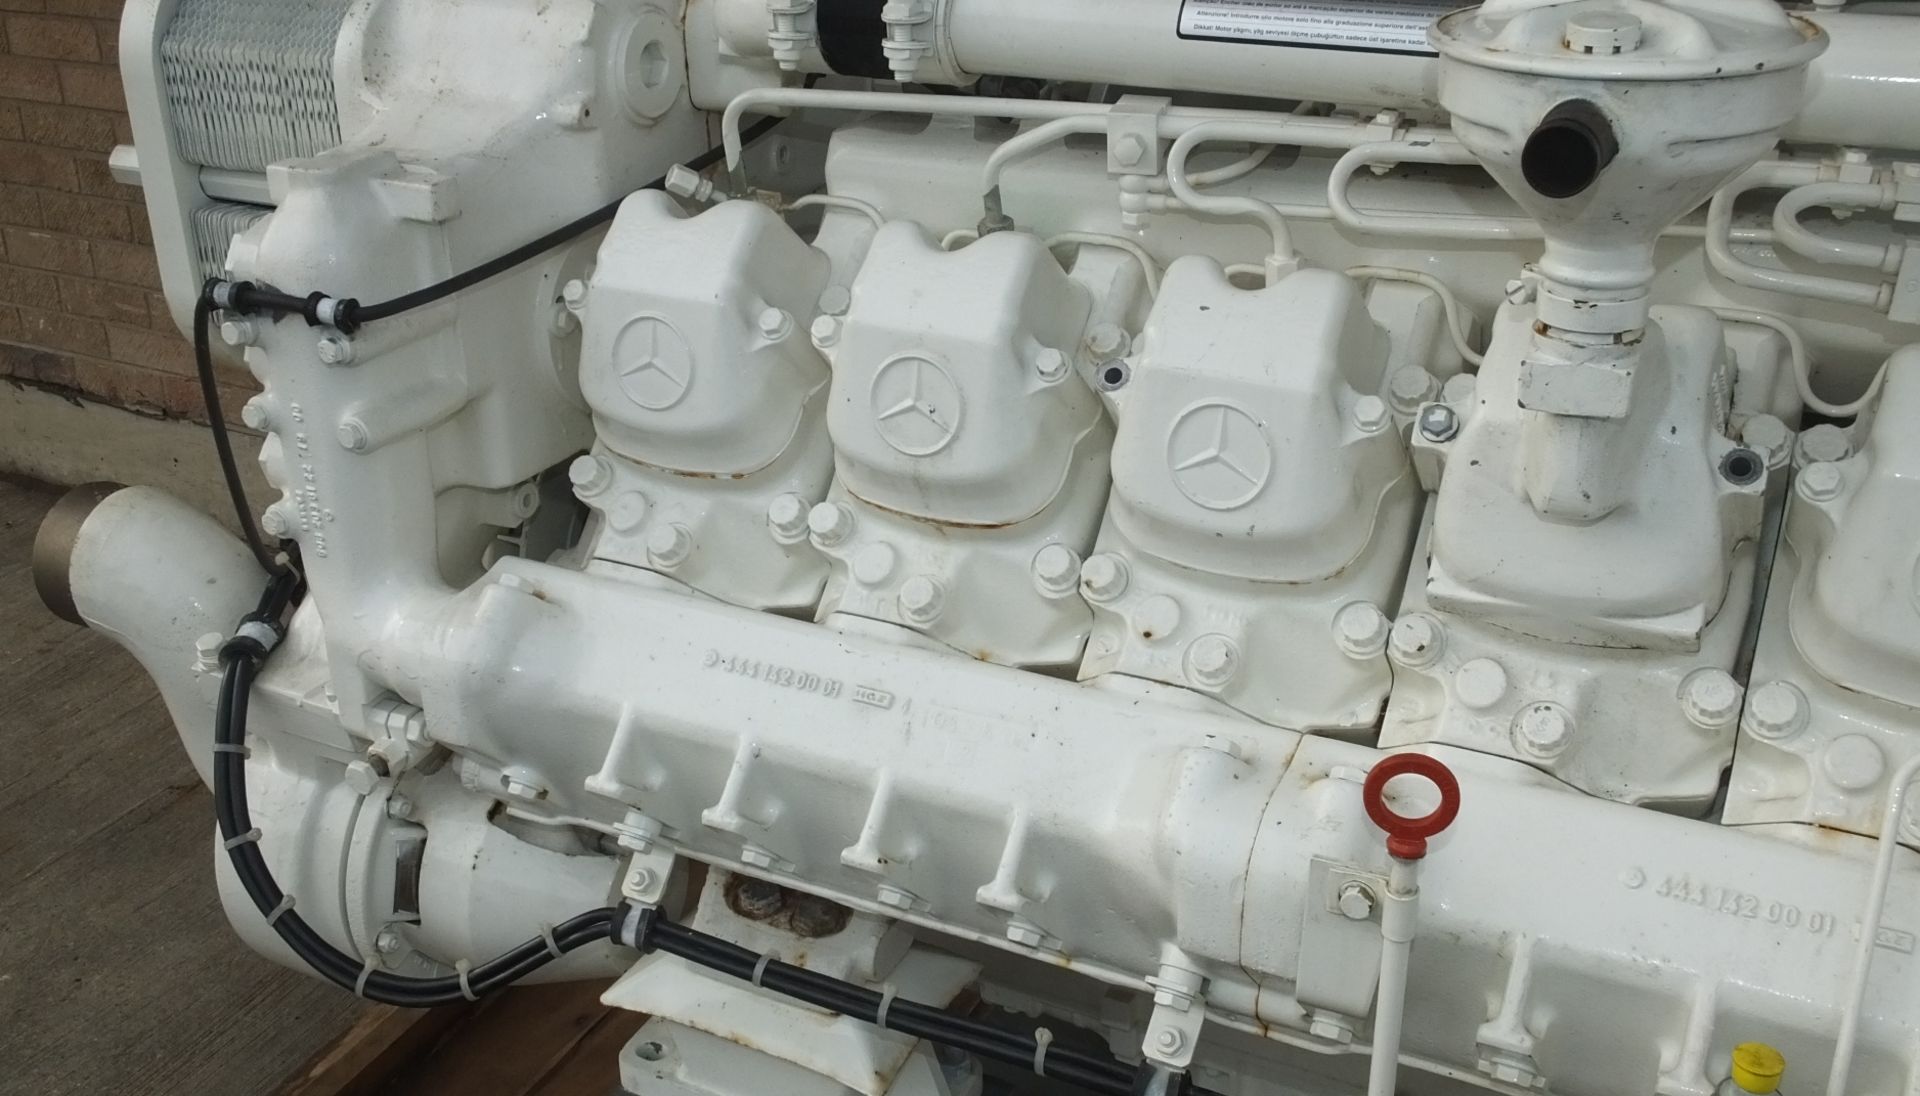 MTU 12V 183 engine - engine code OM 444 LA - 610kW - 1310HP - 2100 RPM - Gearbox ZF Marine - Image 9 of 37